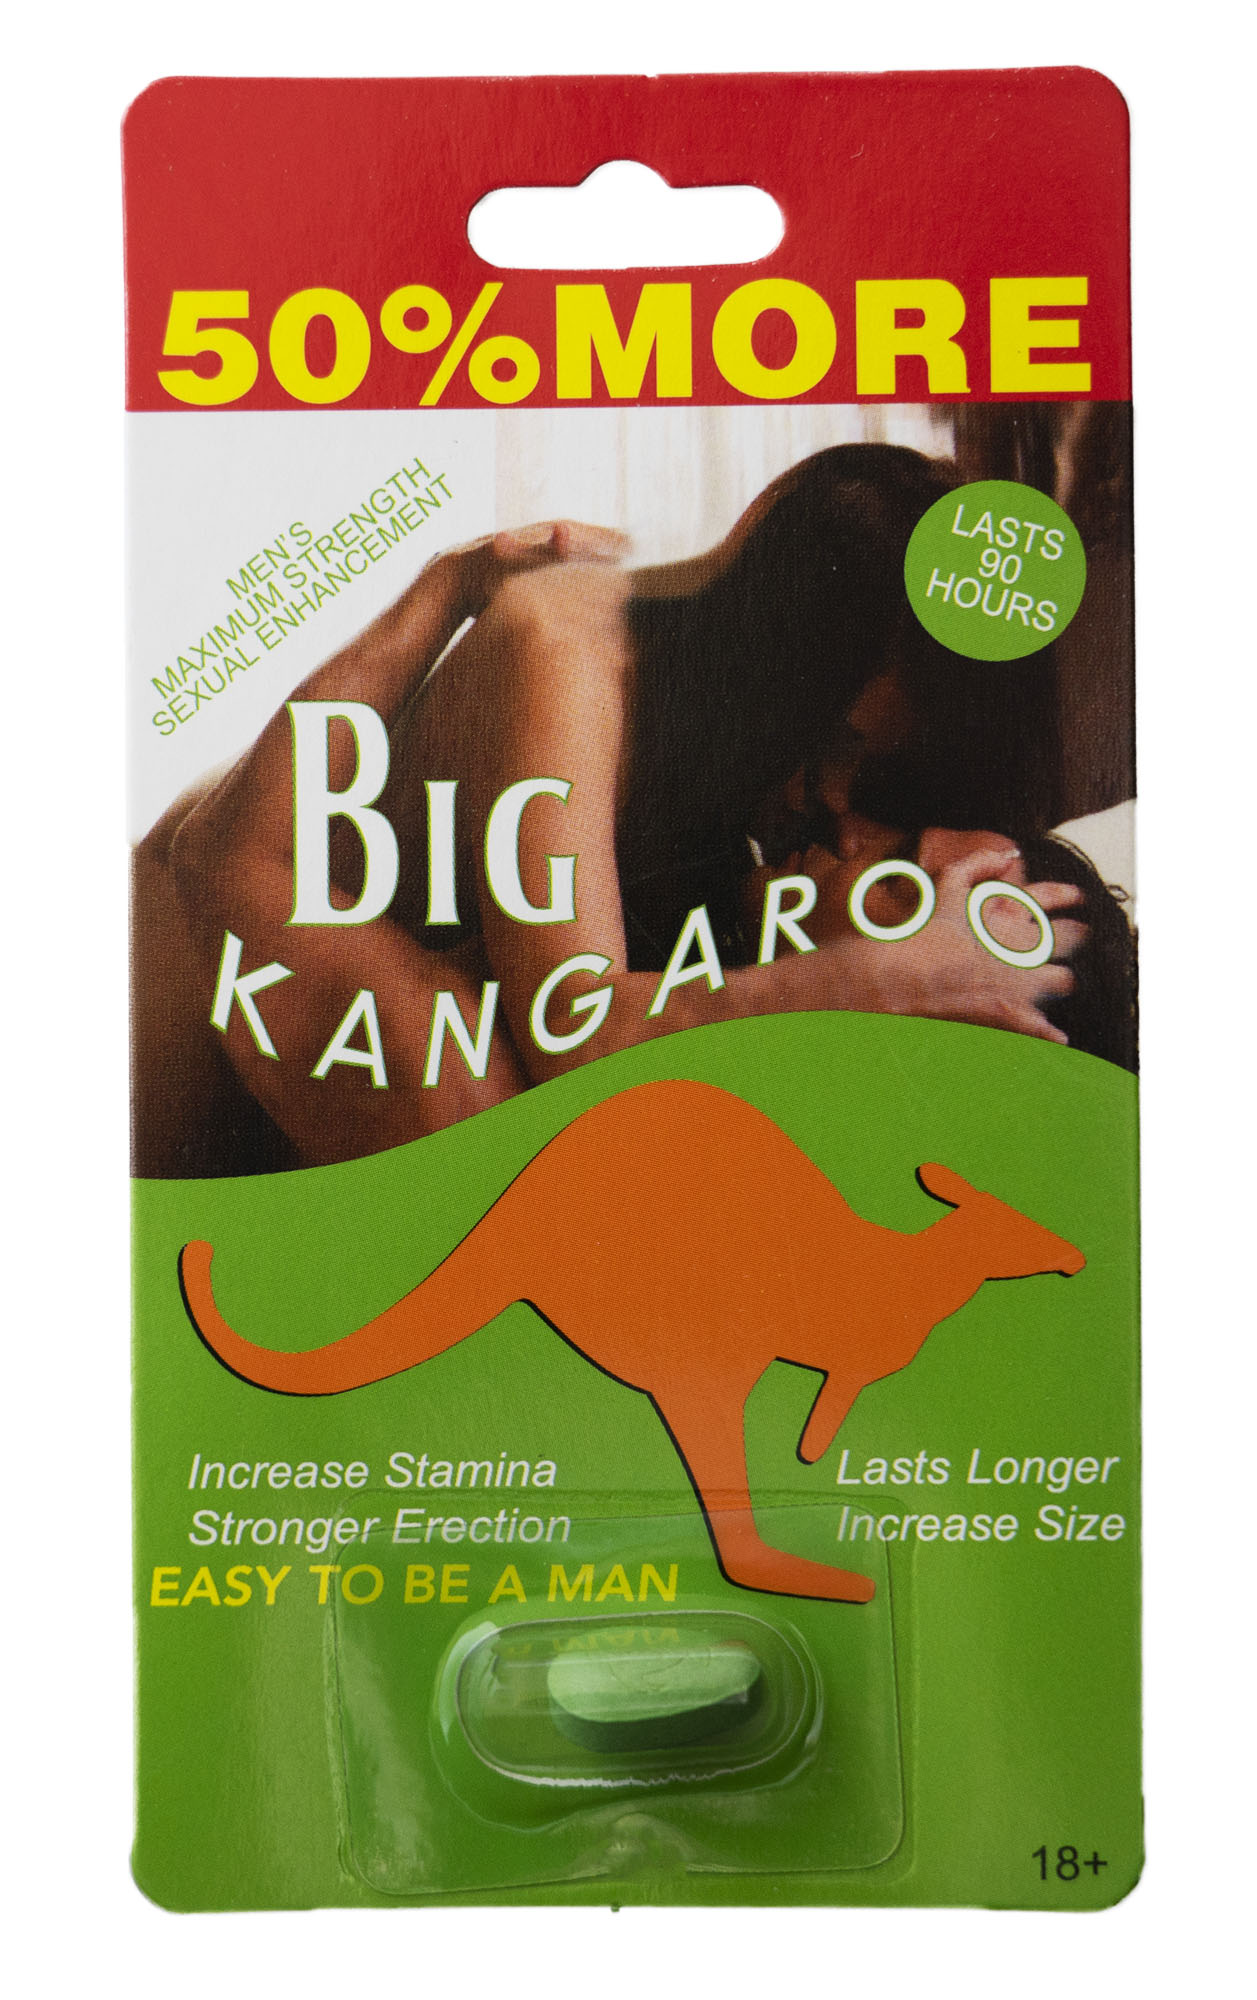 Big-Kangaroo-Pill-Front.jpg